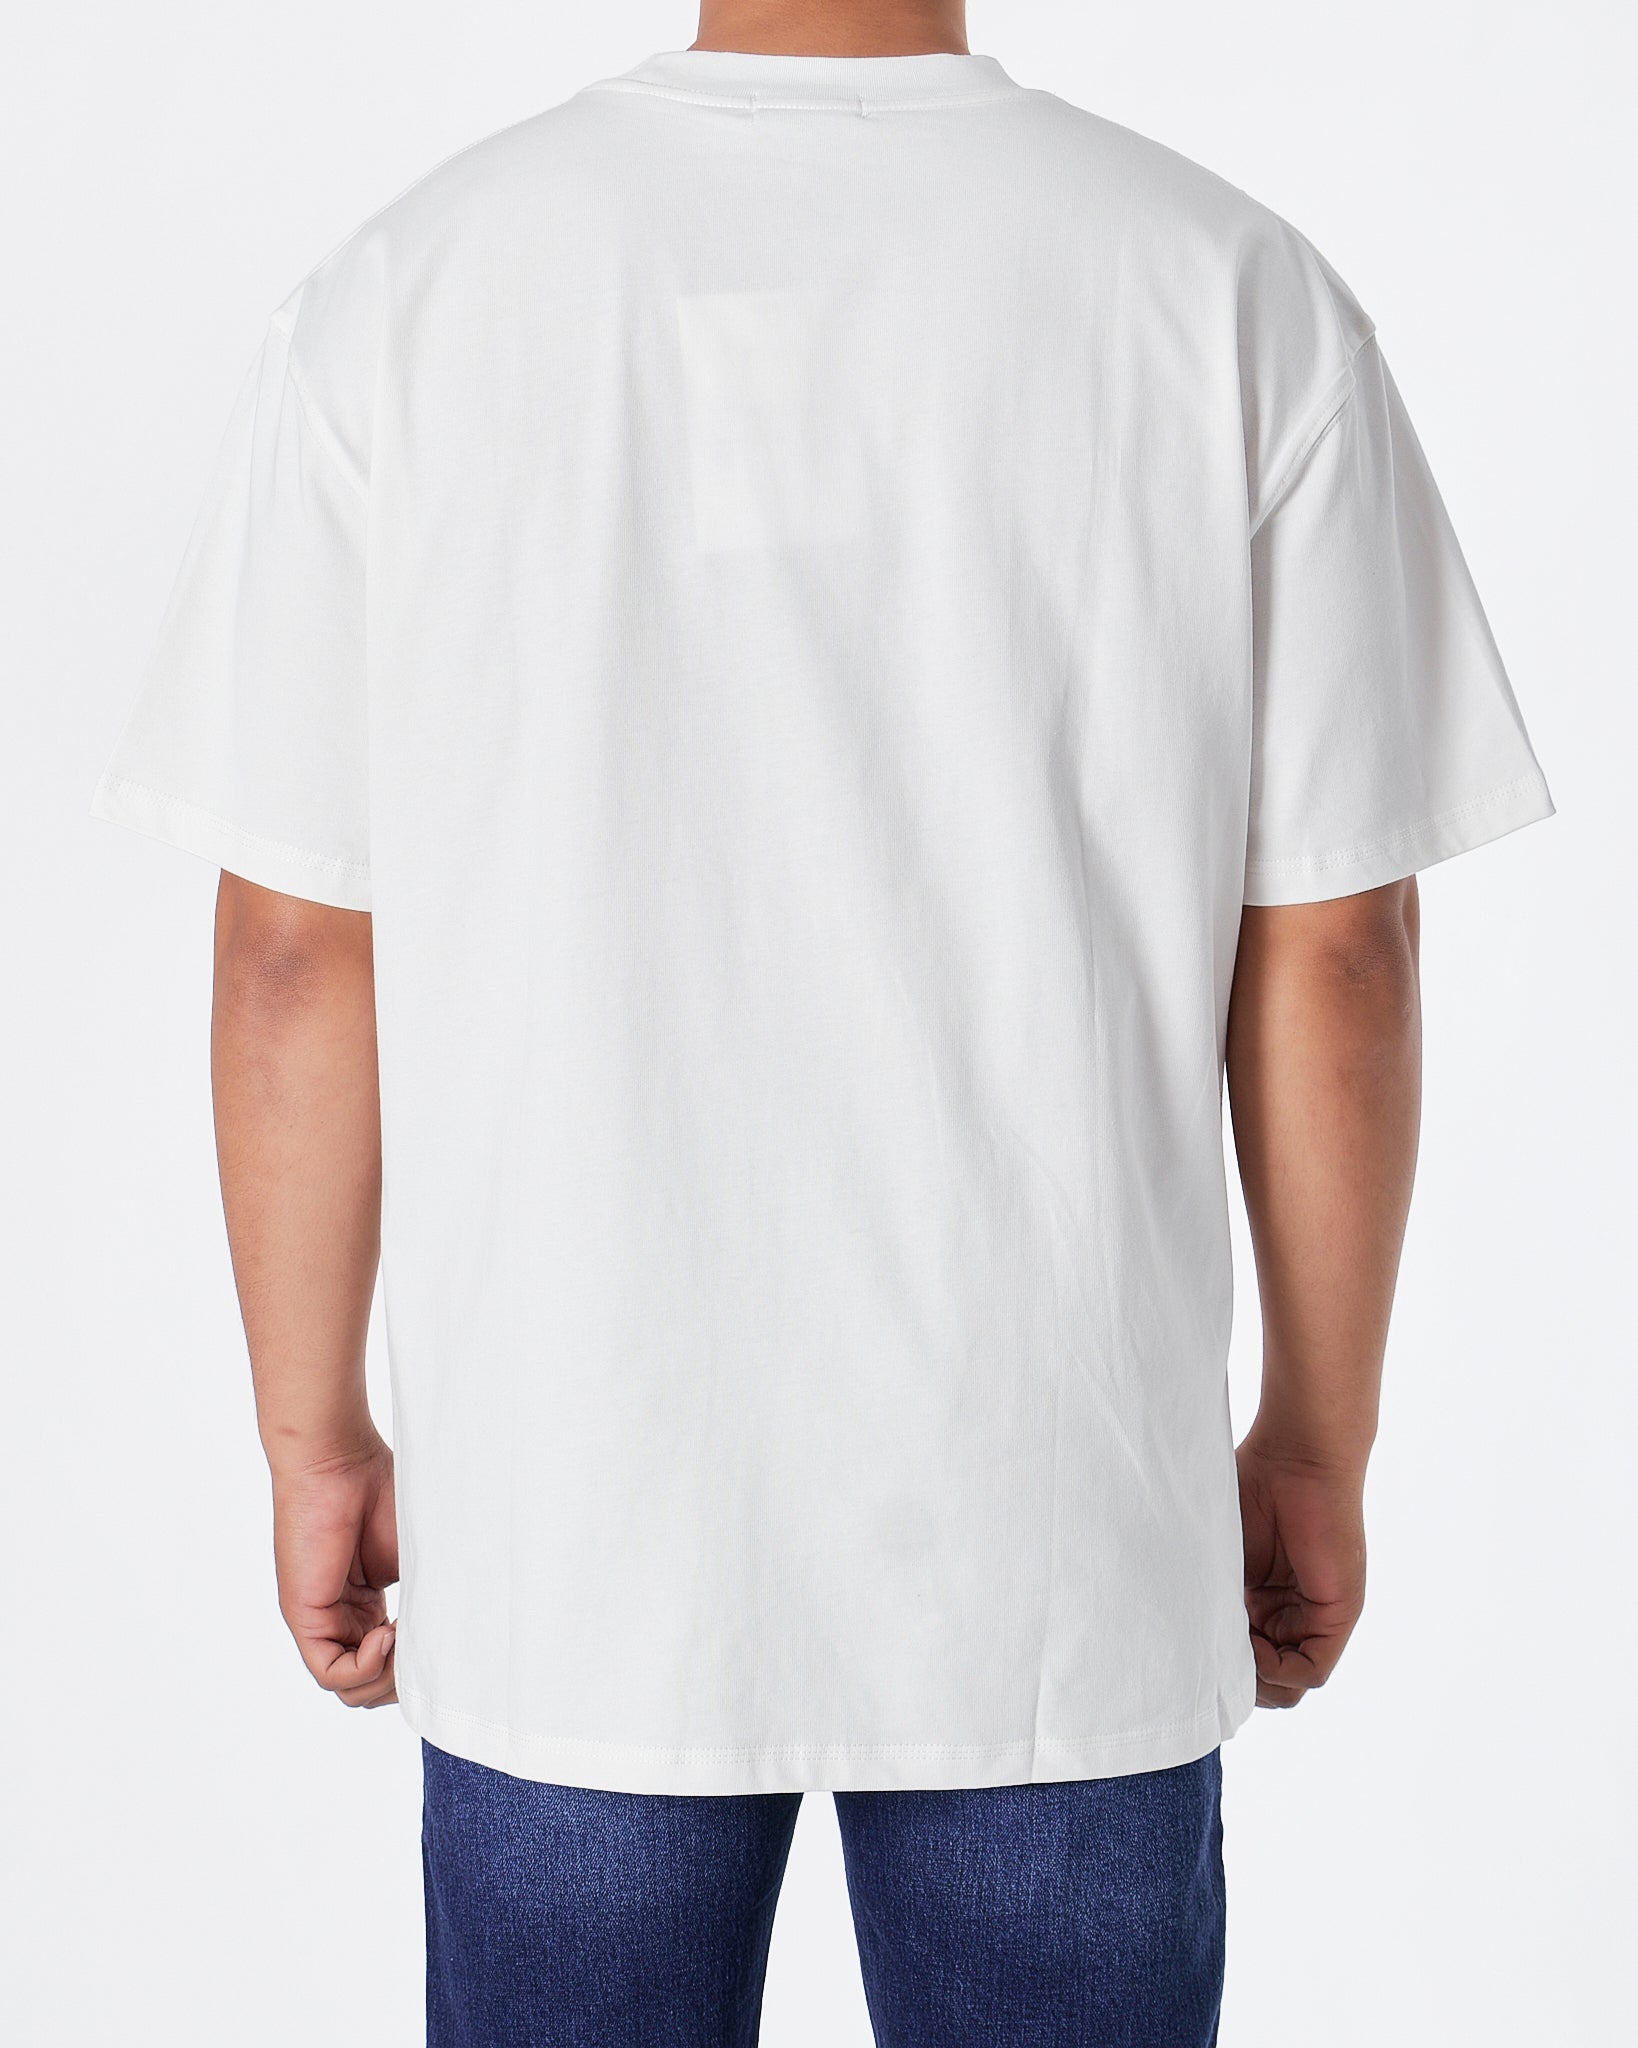 MOI OUTFIT-WE1 Purple Heart Men White T-Shirt 25.90